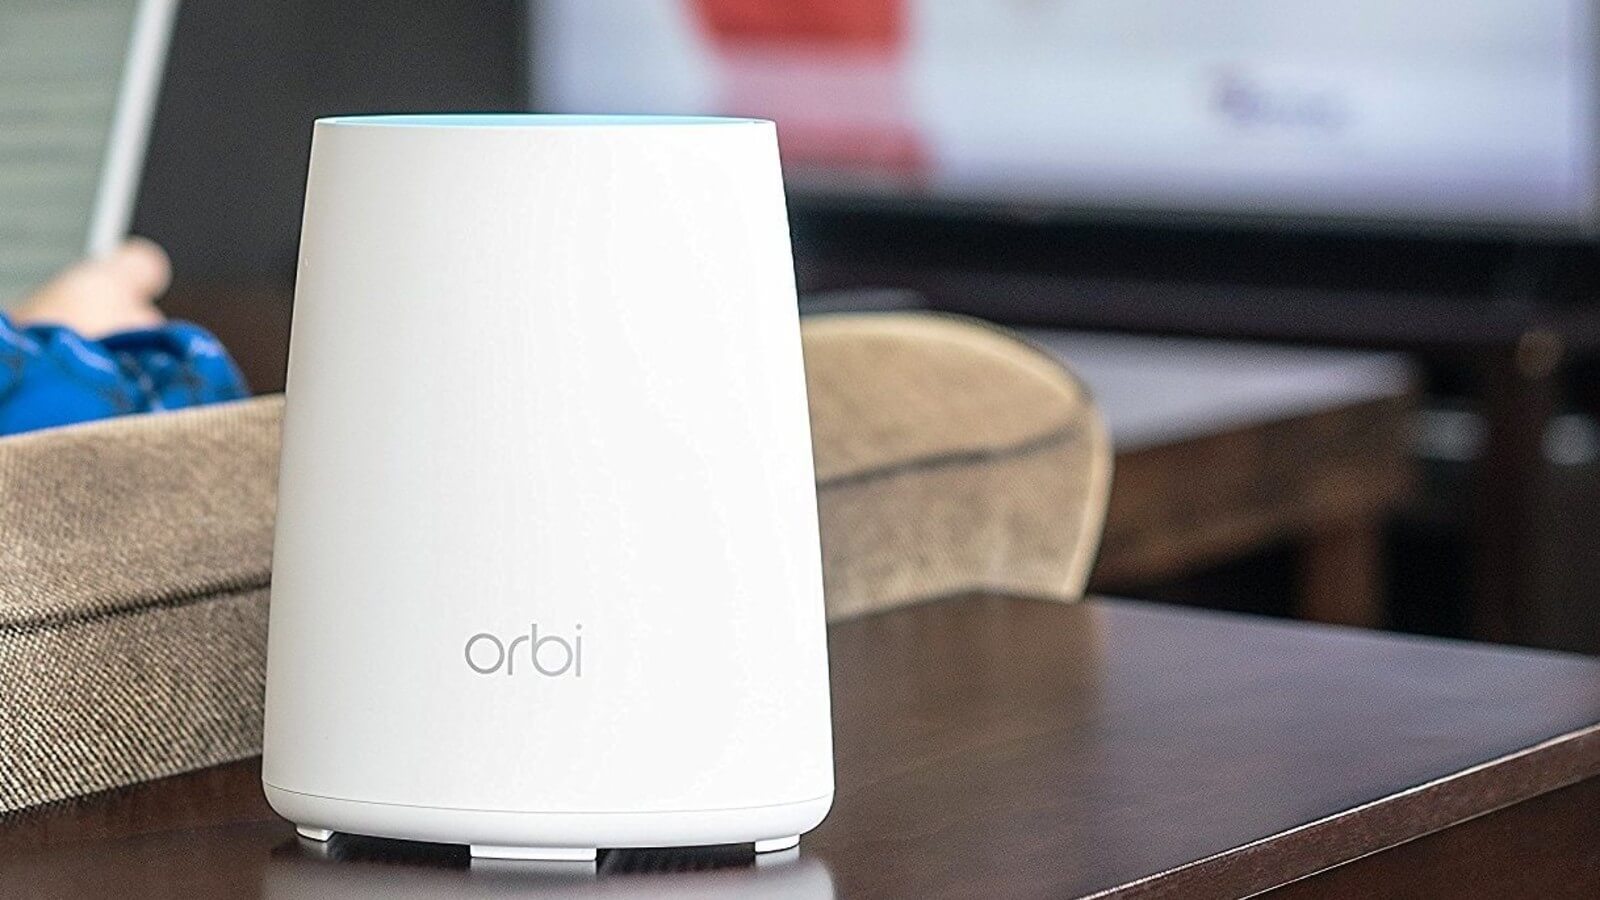 orbi router